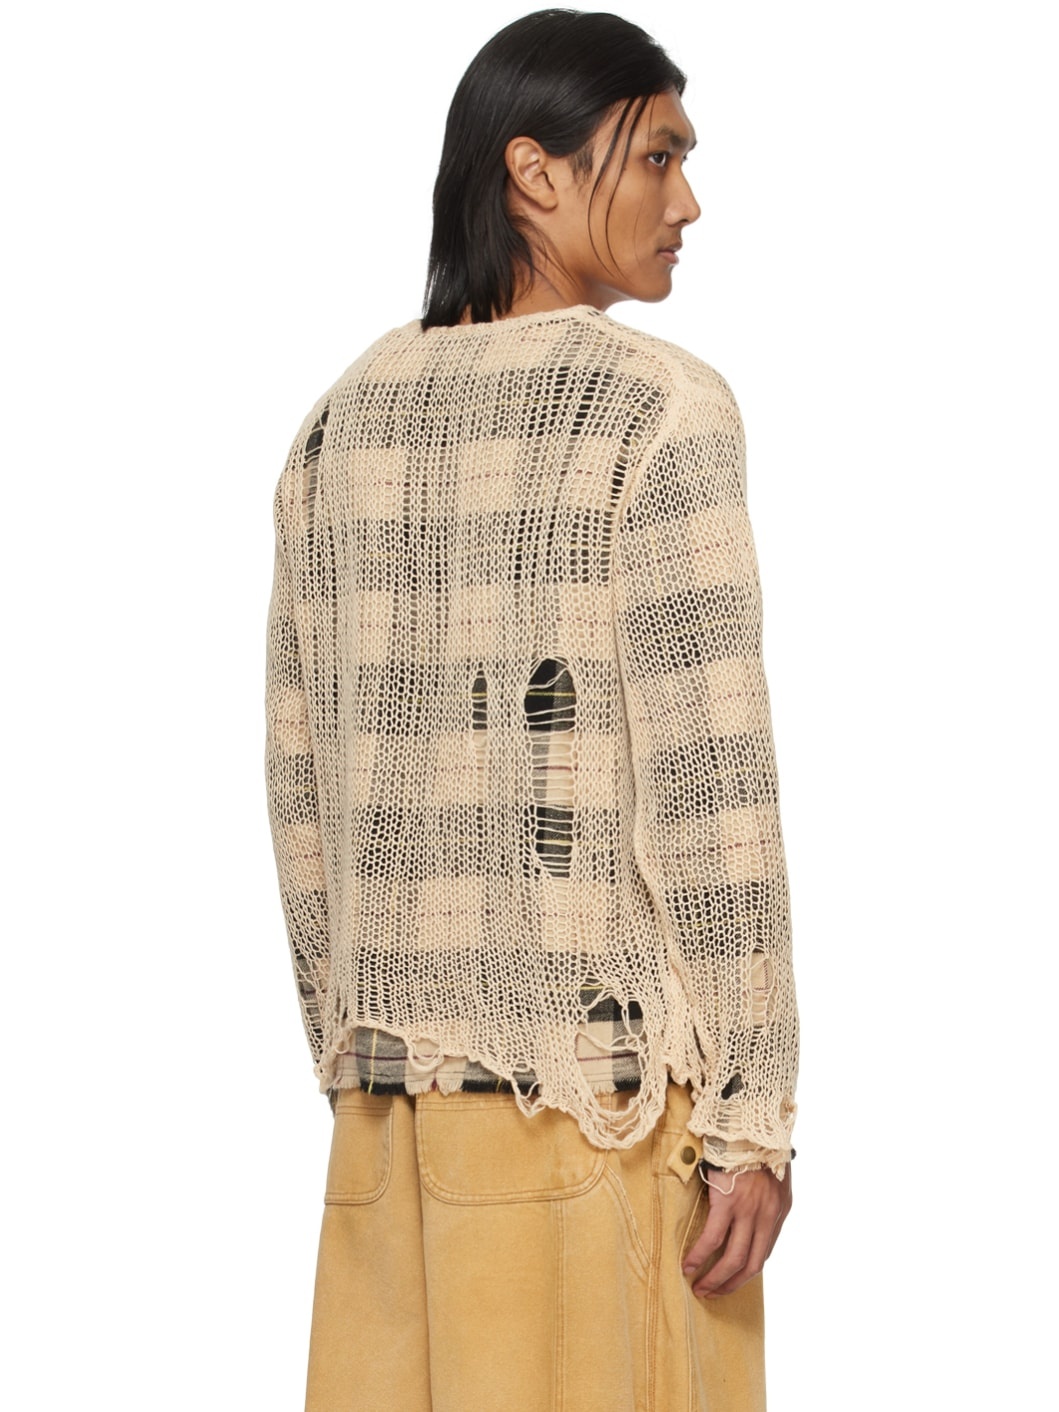 Beige Overlay Distressed Sweater - 3